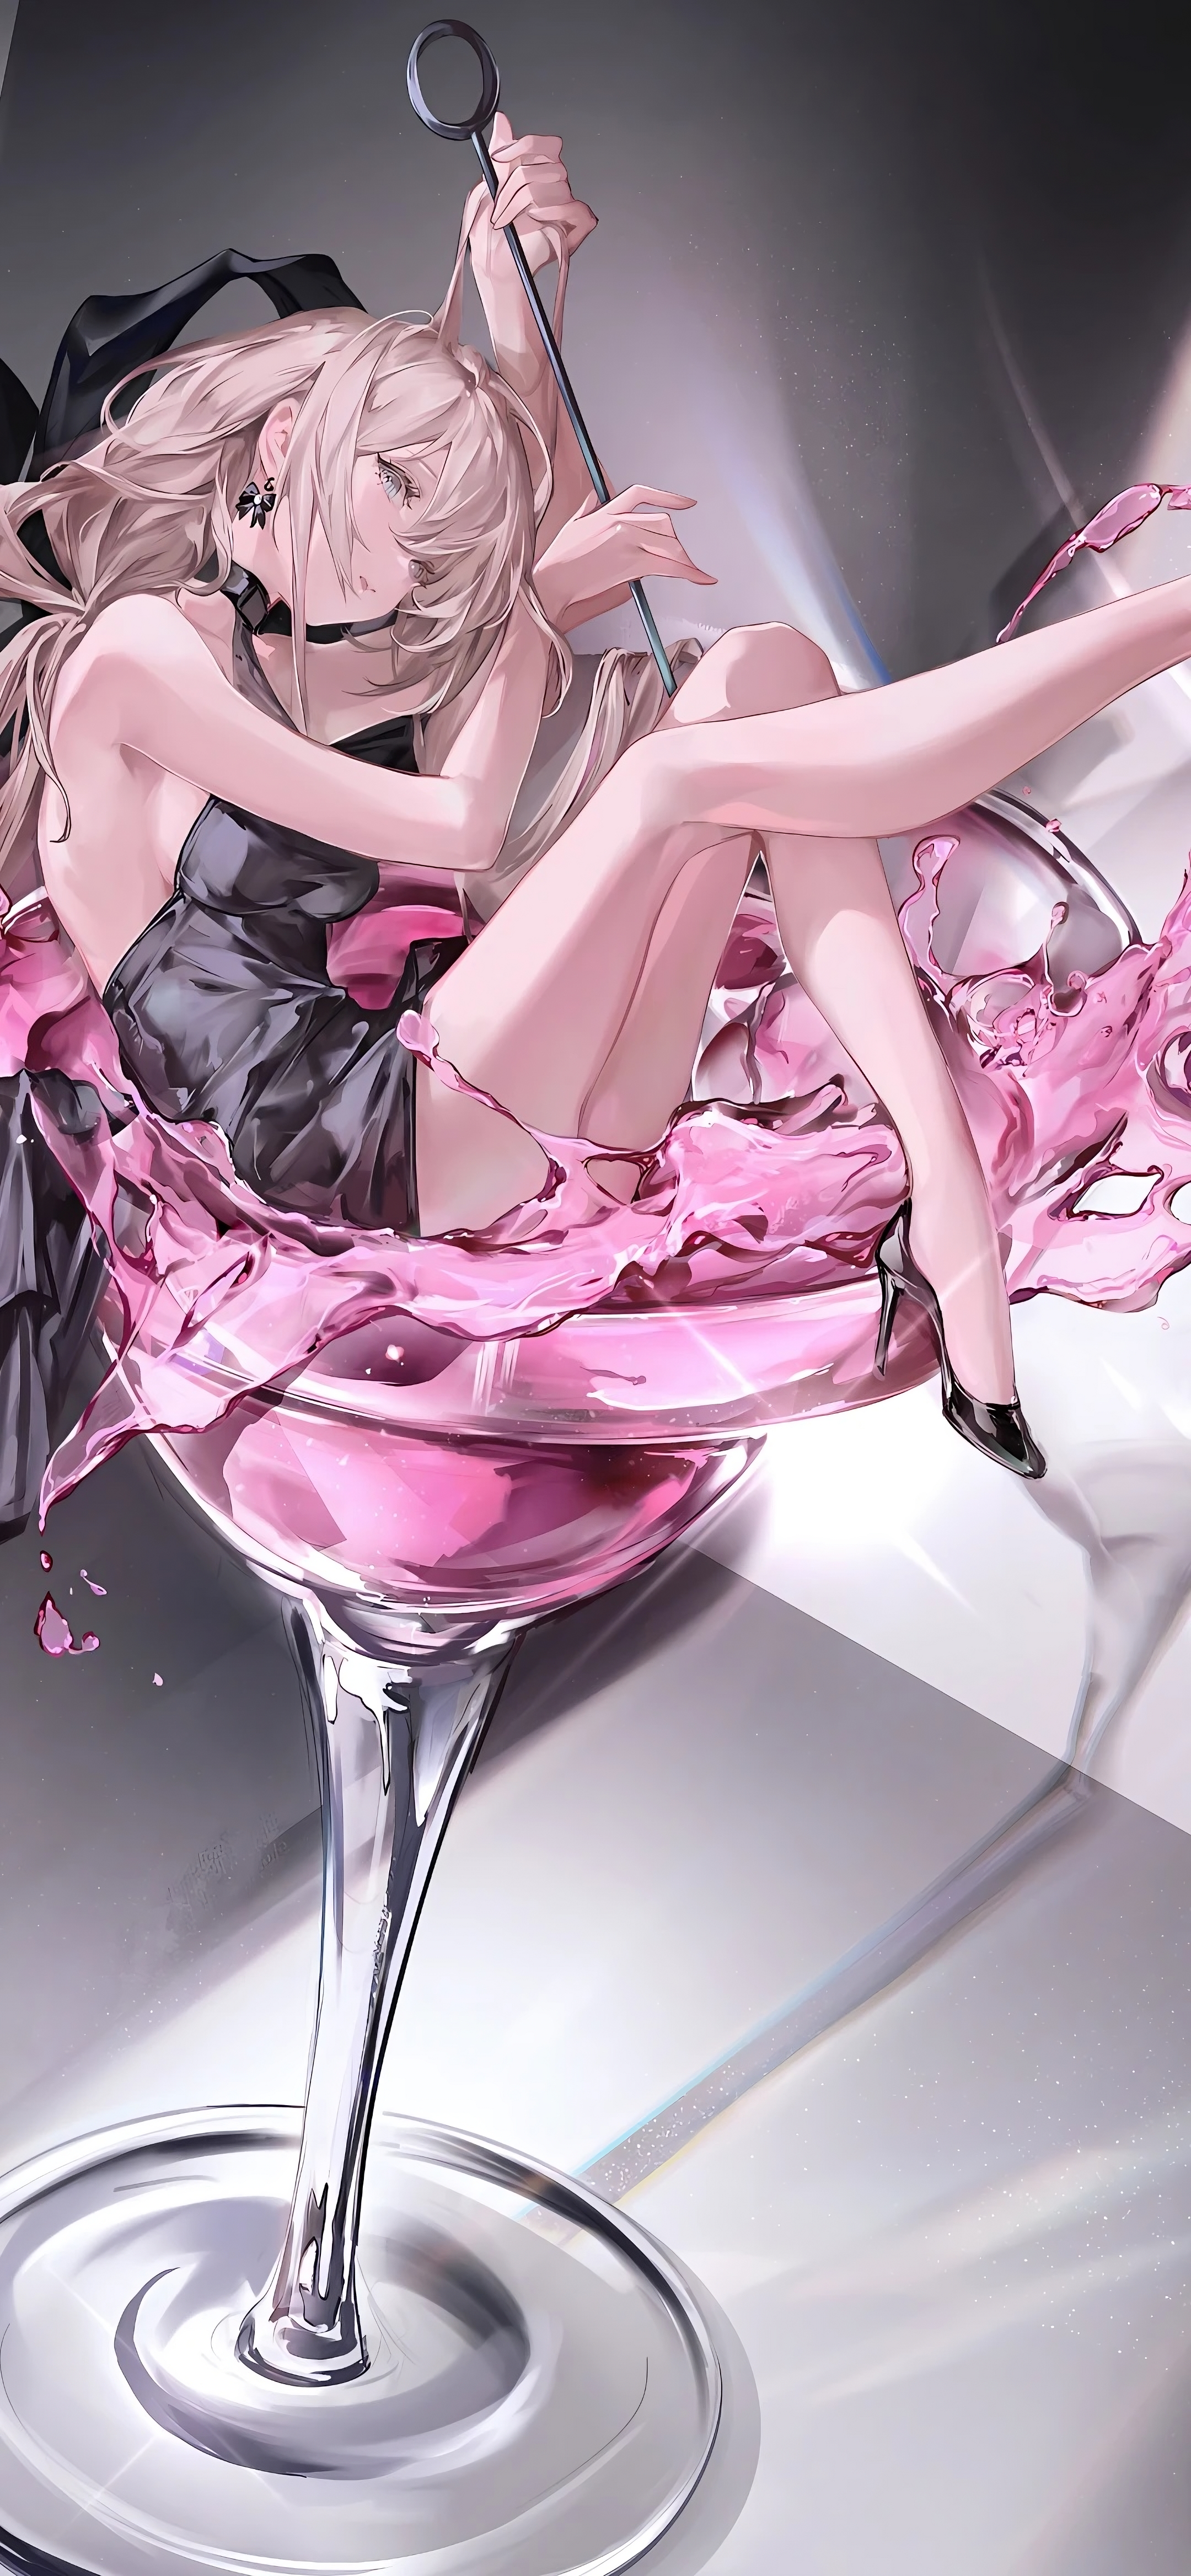 Anime 2160x4672 anime anime girls portrait display long hair drink glass looking at viewer earring sideboob dress heels